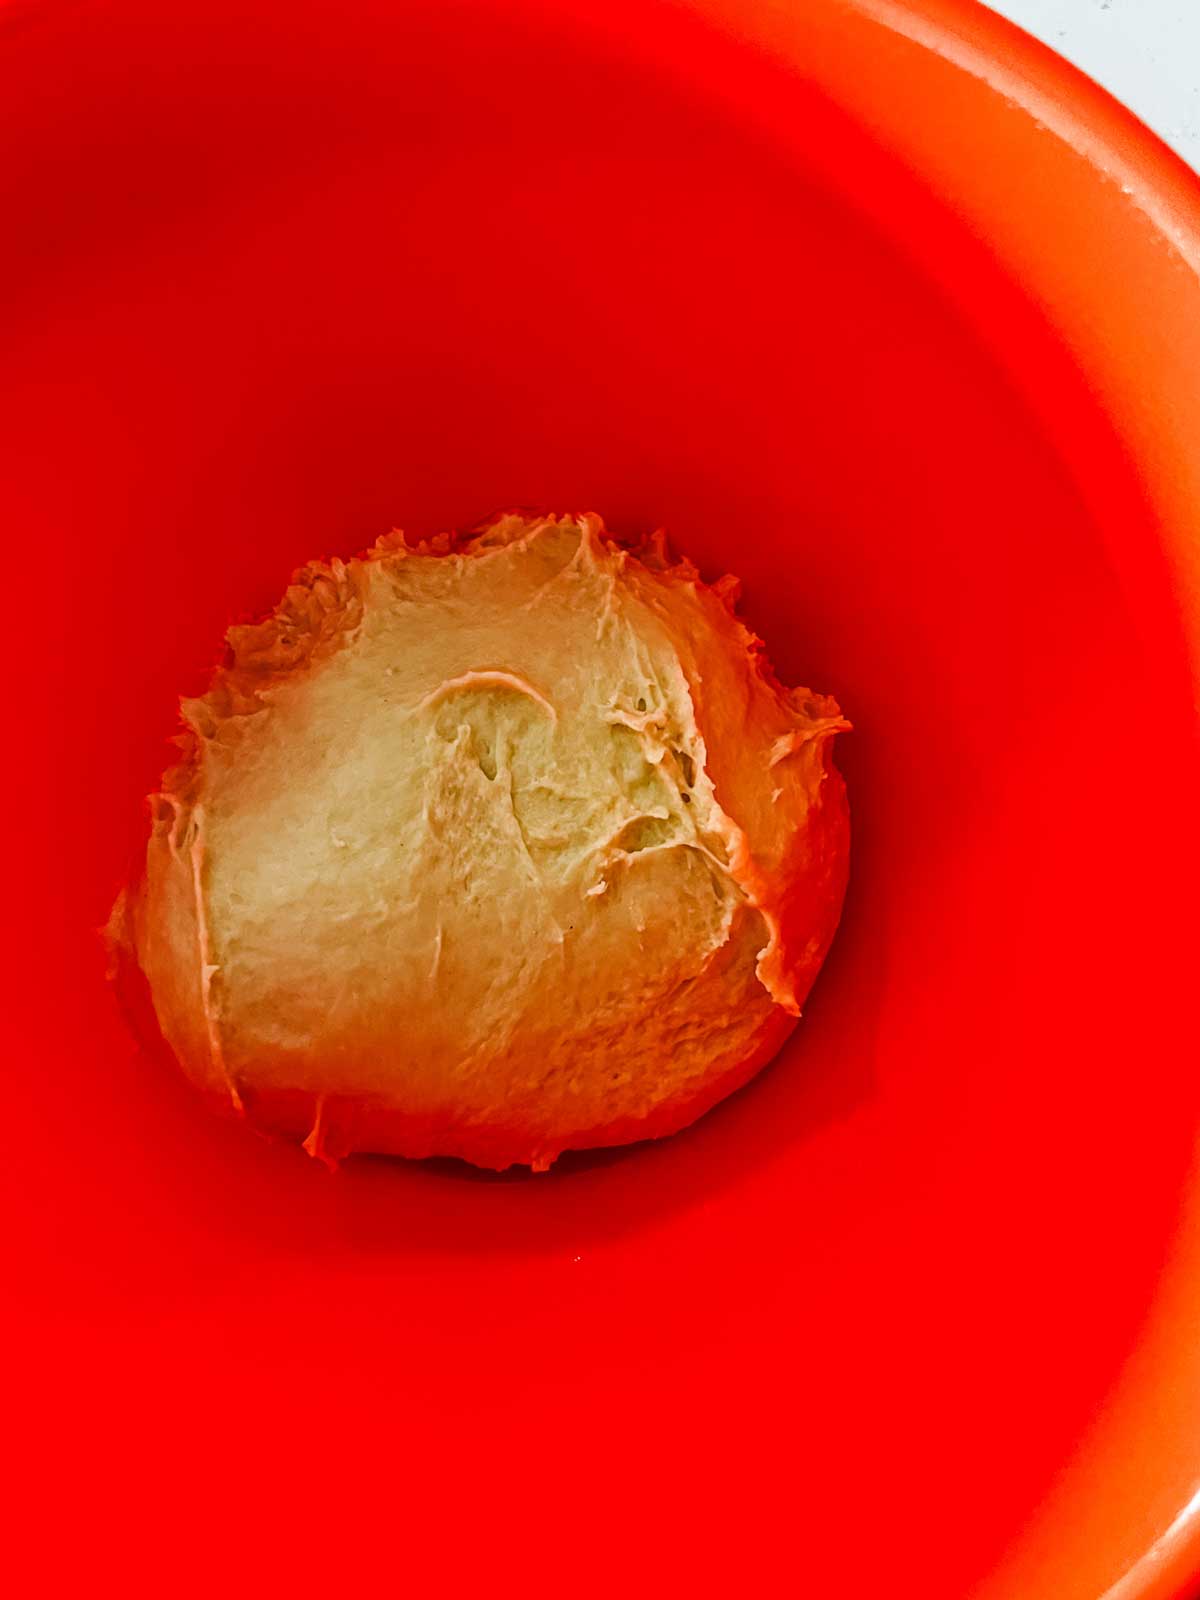 Cinnamon roll dough in an orange bowl ready to rise.